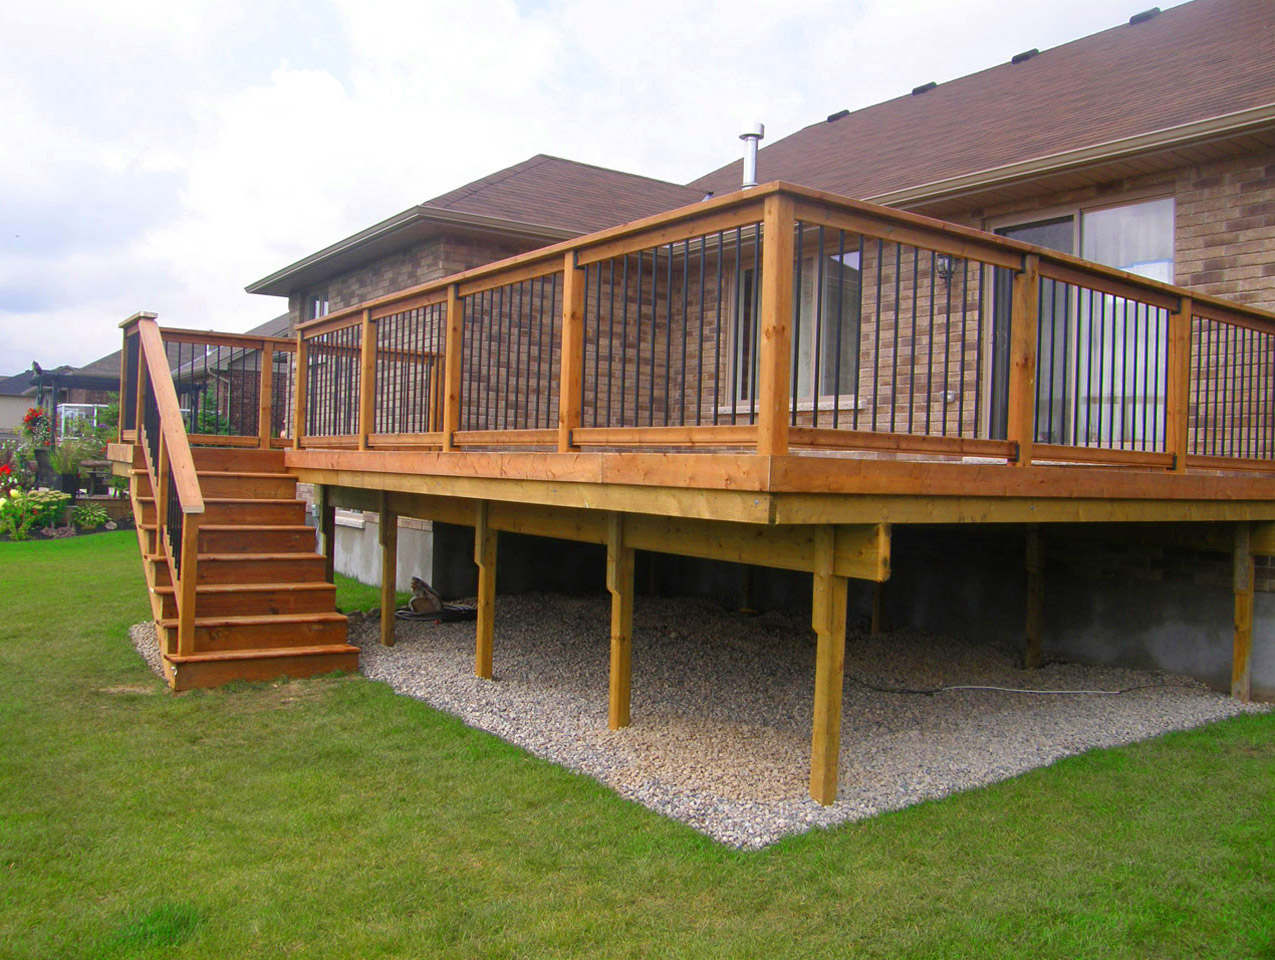 turf pro landscaping decks